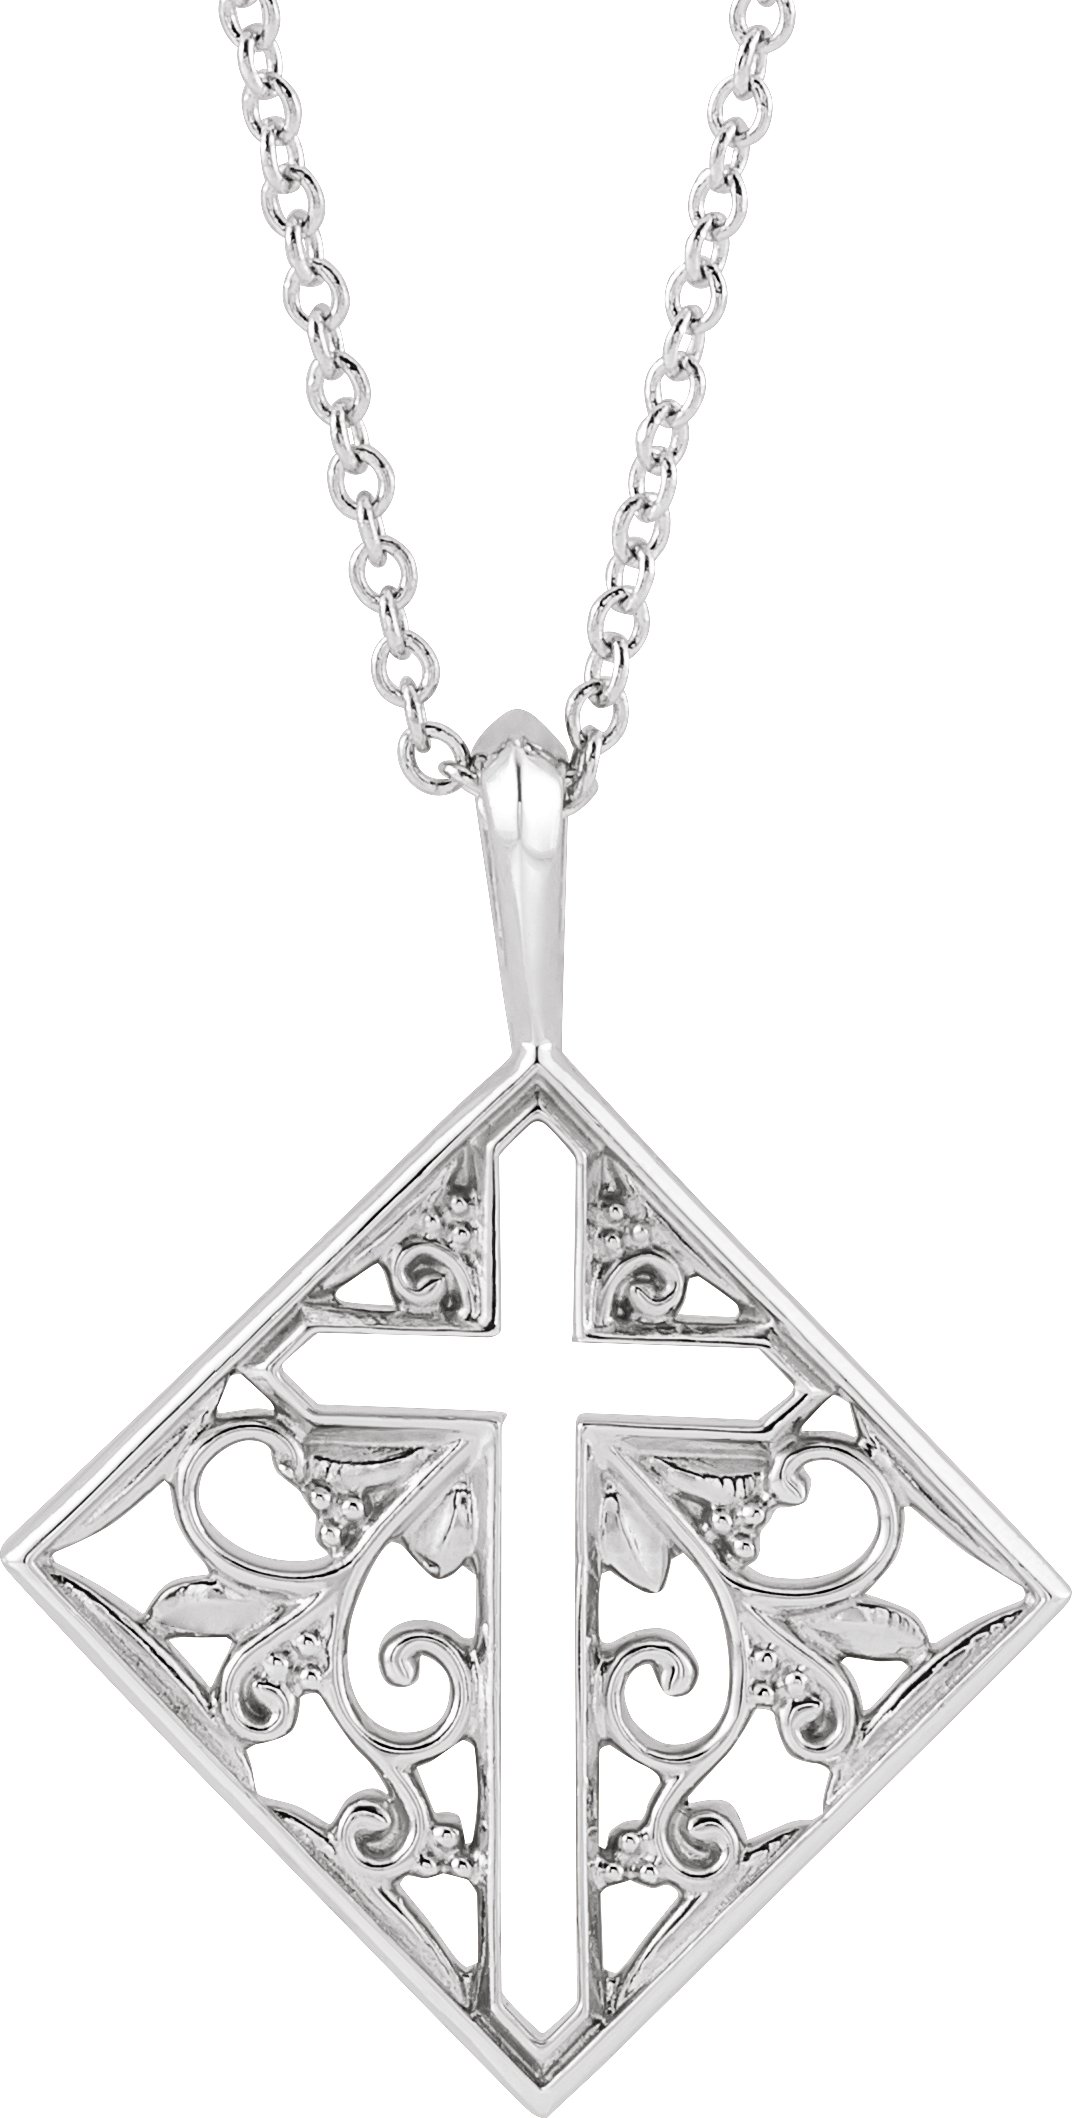 Sterling Silver Ornate Pierced Cross 16-18" Necklace